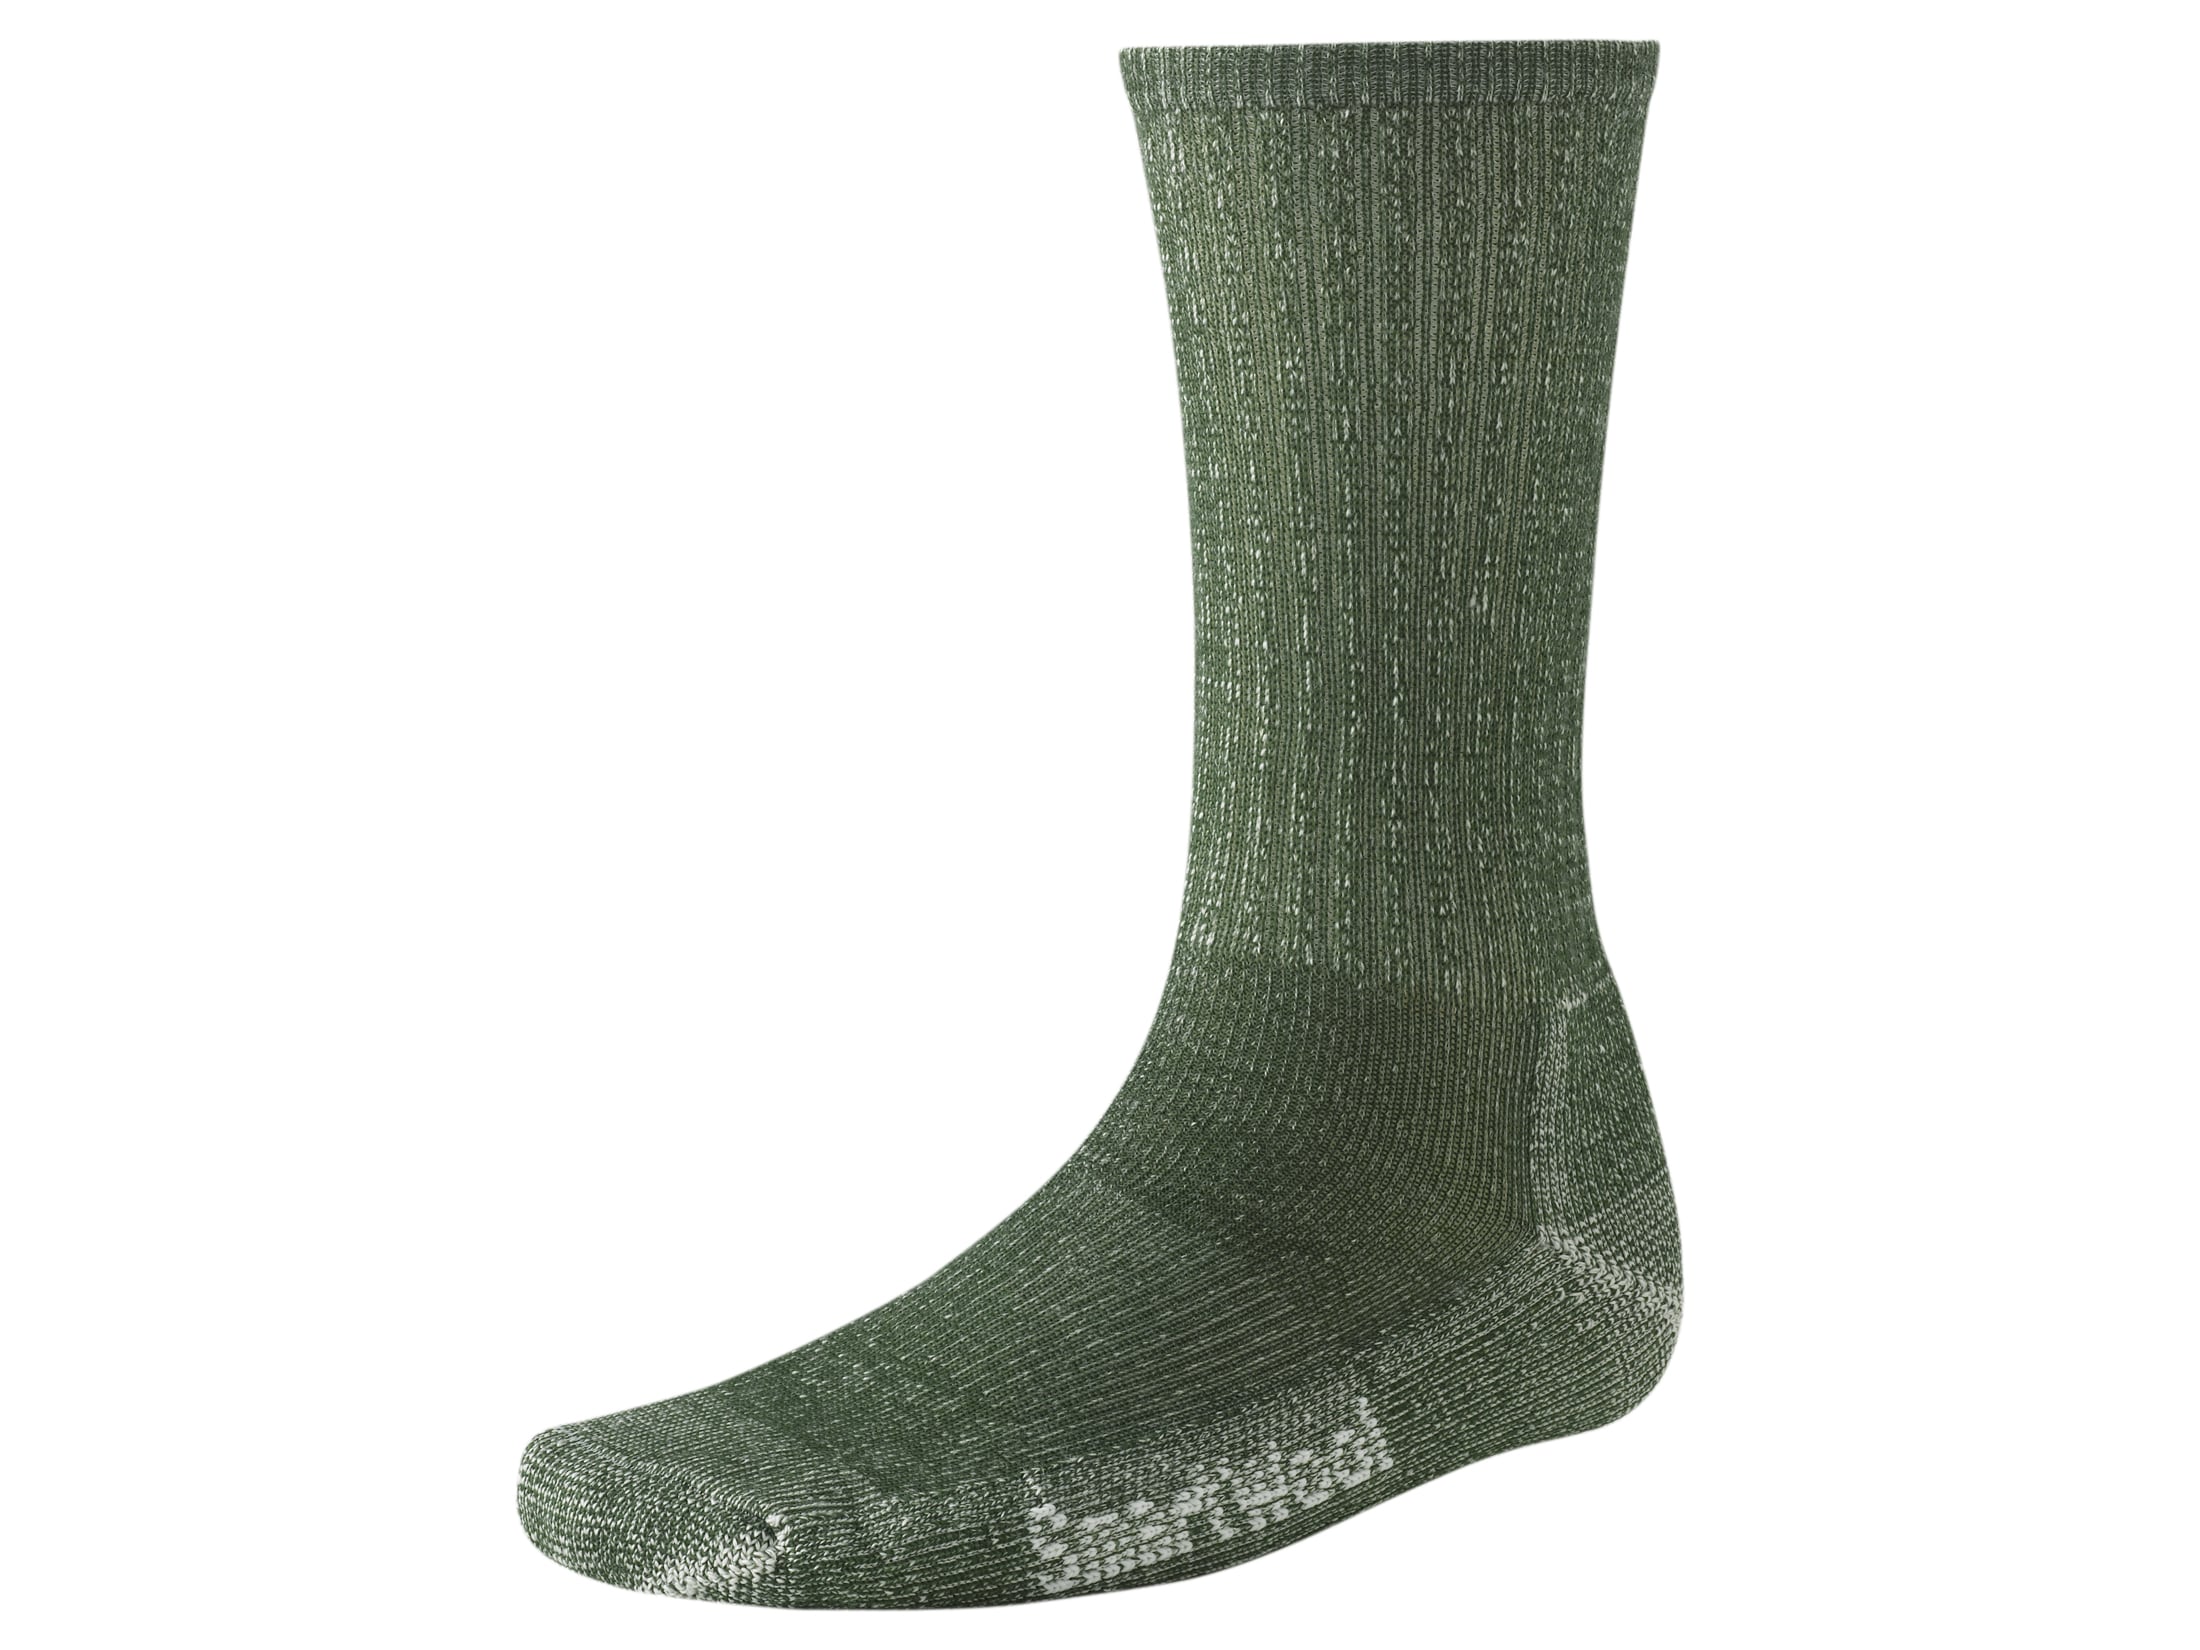 Smartwool Men's Hike Light Crew Socks Wool Blend Gray Medium (6-8.5) 1